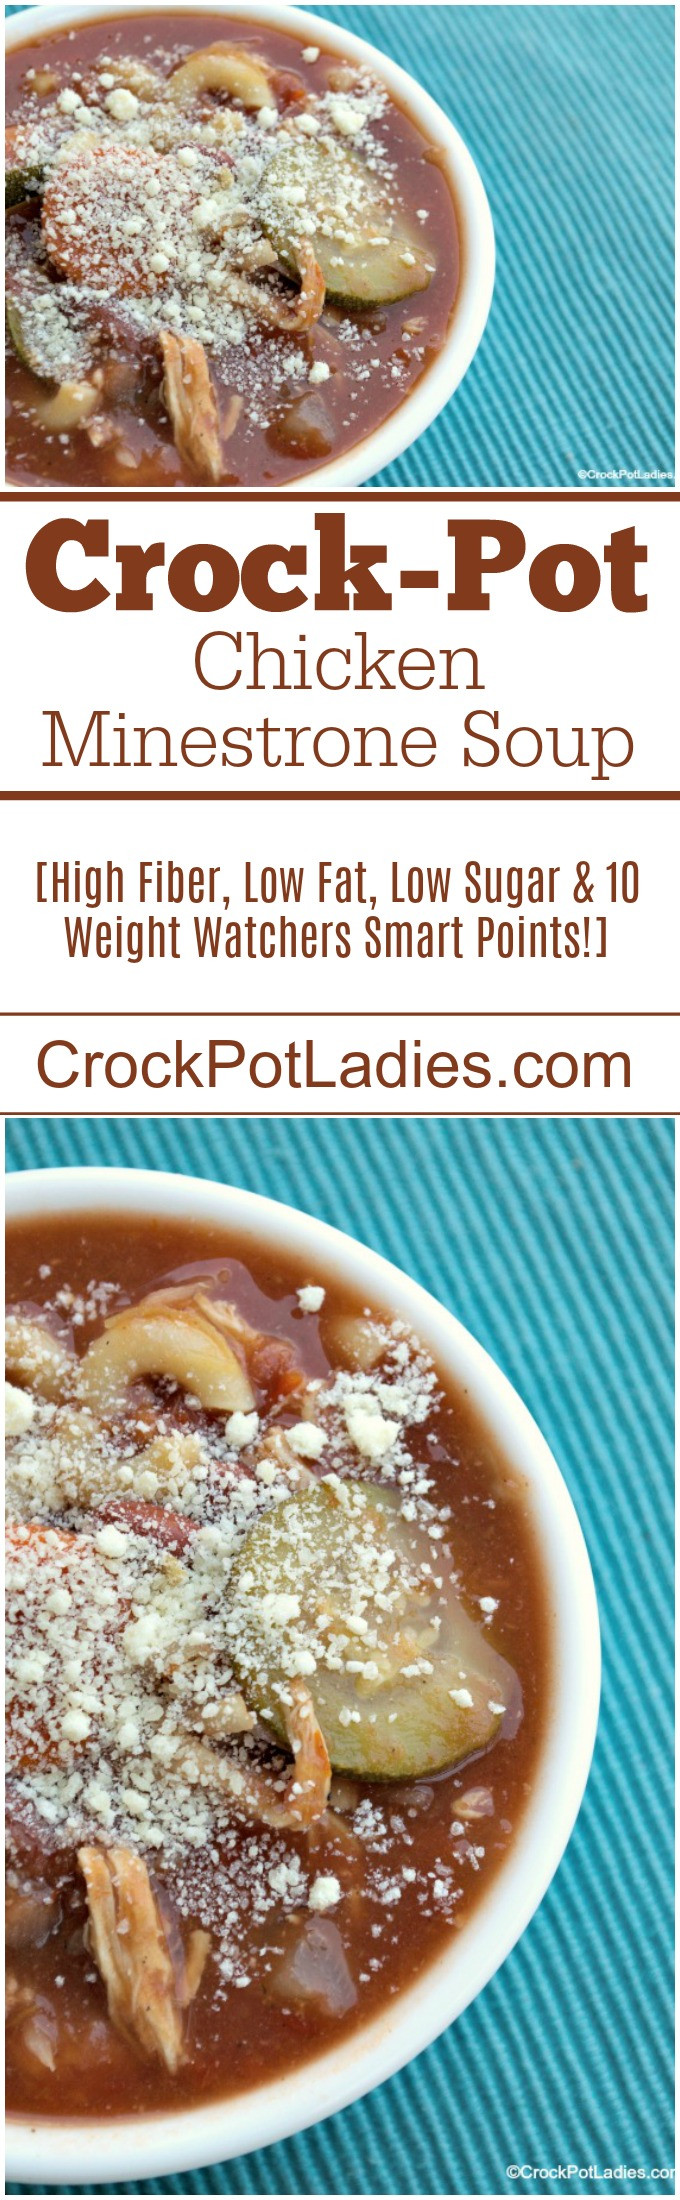 High Fiber Chicken Recipes
 Crock Pot Chicken Minestrone Soup Crock Pot La s